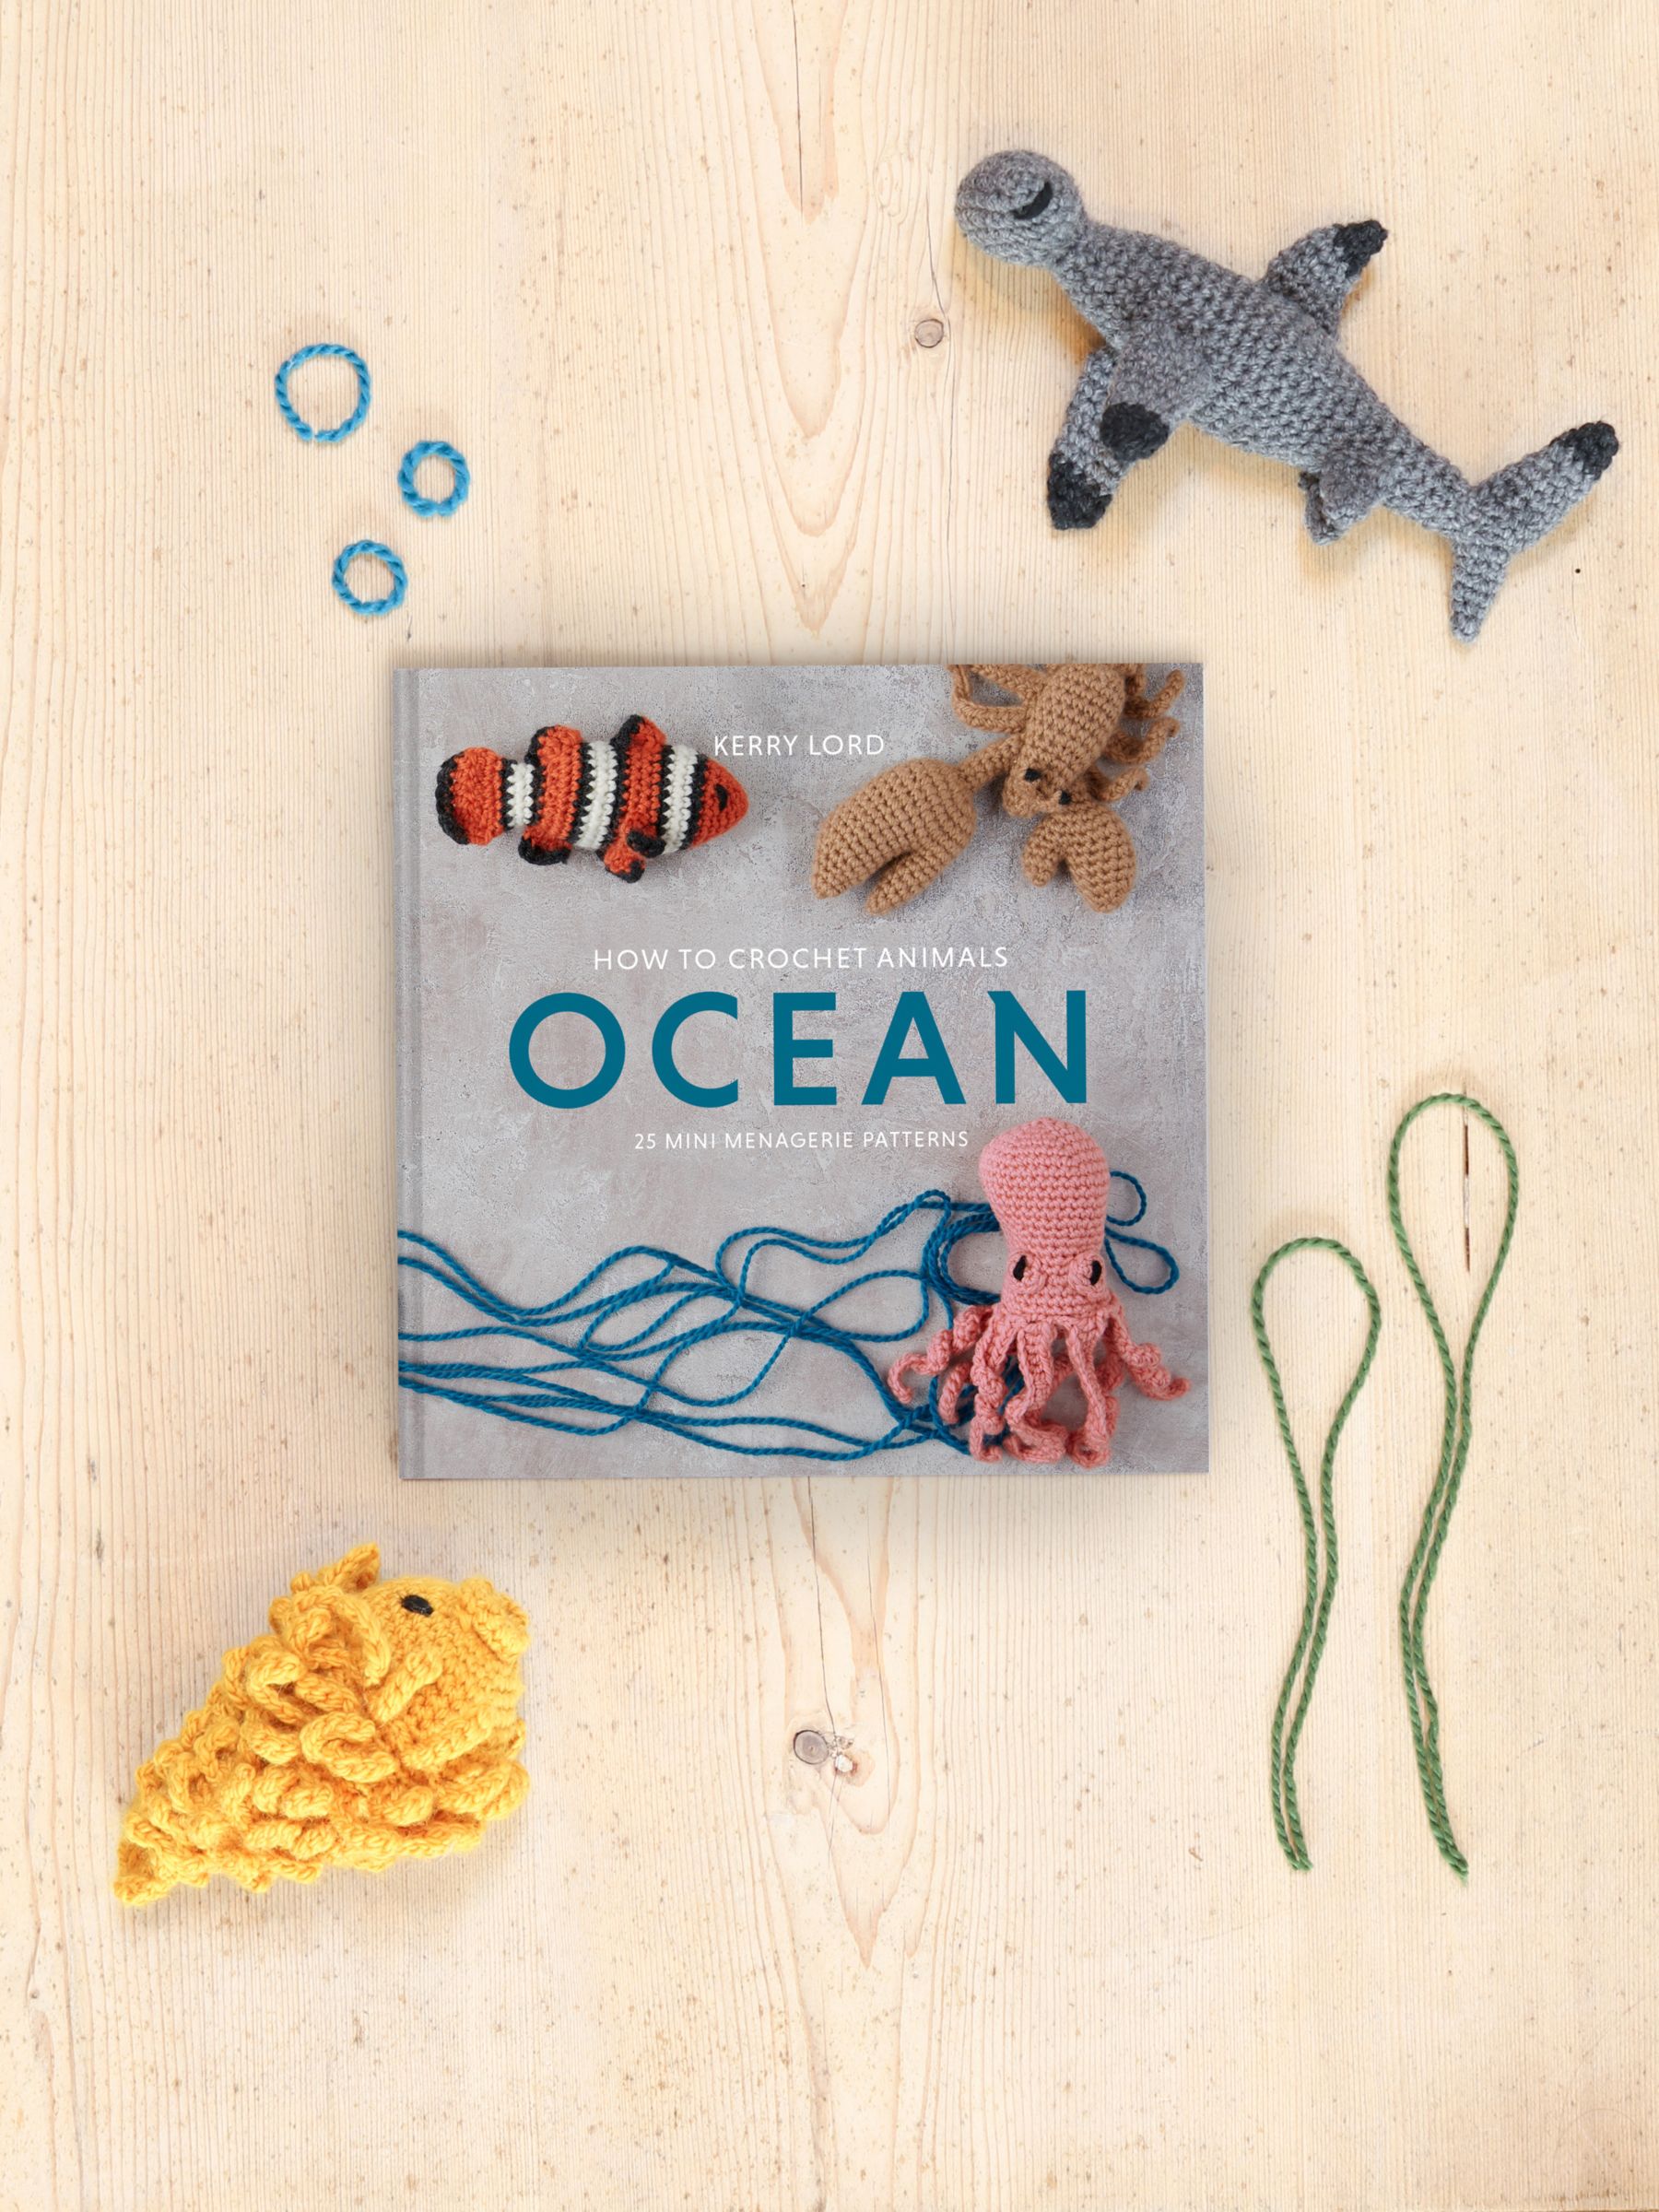 Mini Amigurumi Ocean: 25 Tiny Creatures to Crochet [Book]